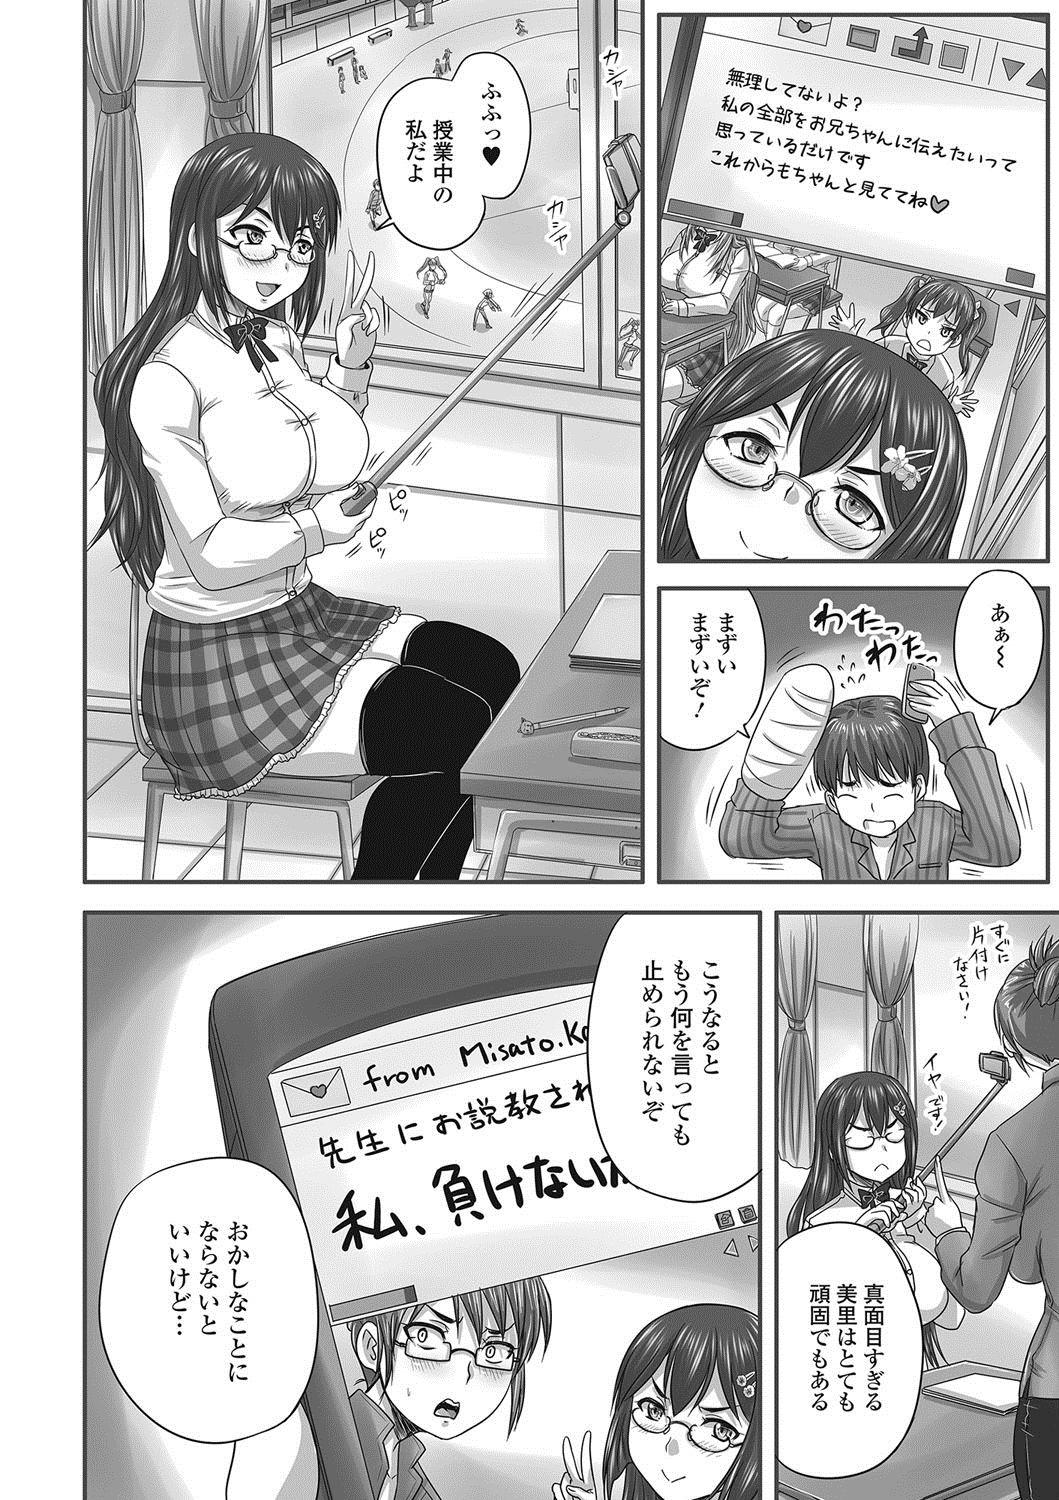 Sexy Girl Nozoite wa Ikenai NEO - Do Not Peep NEO! Doggy - Page 9